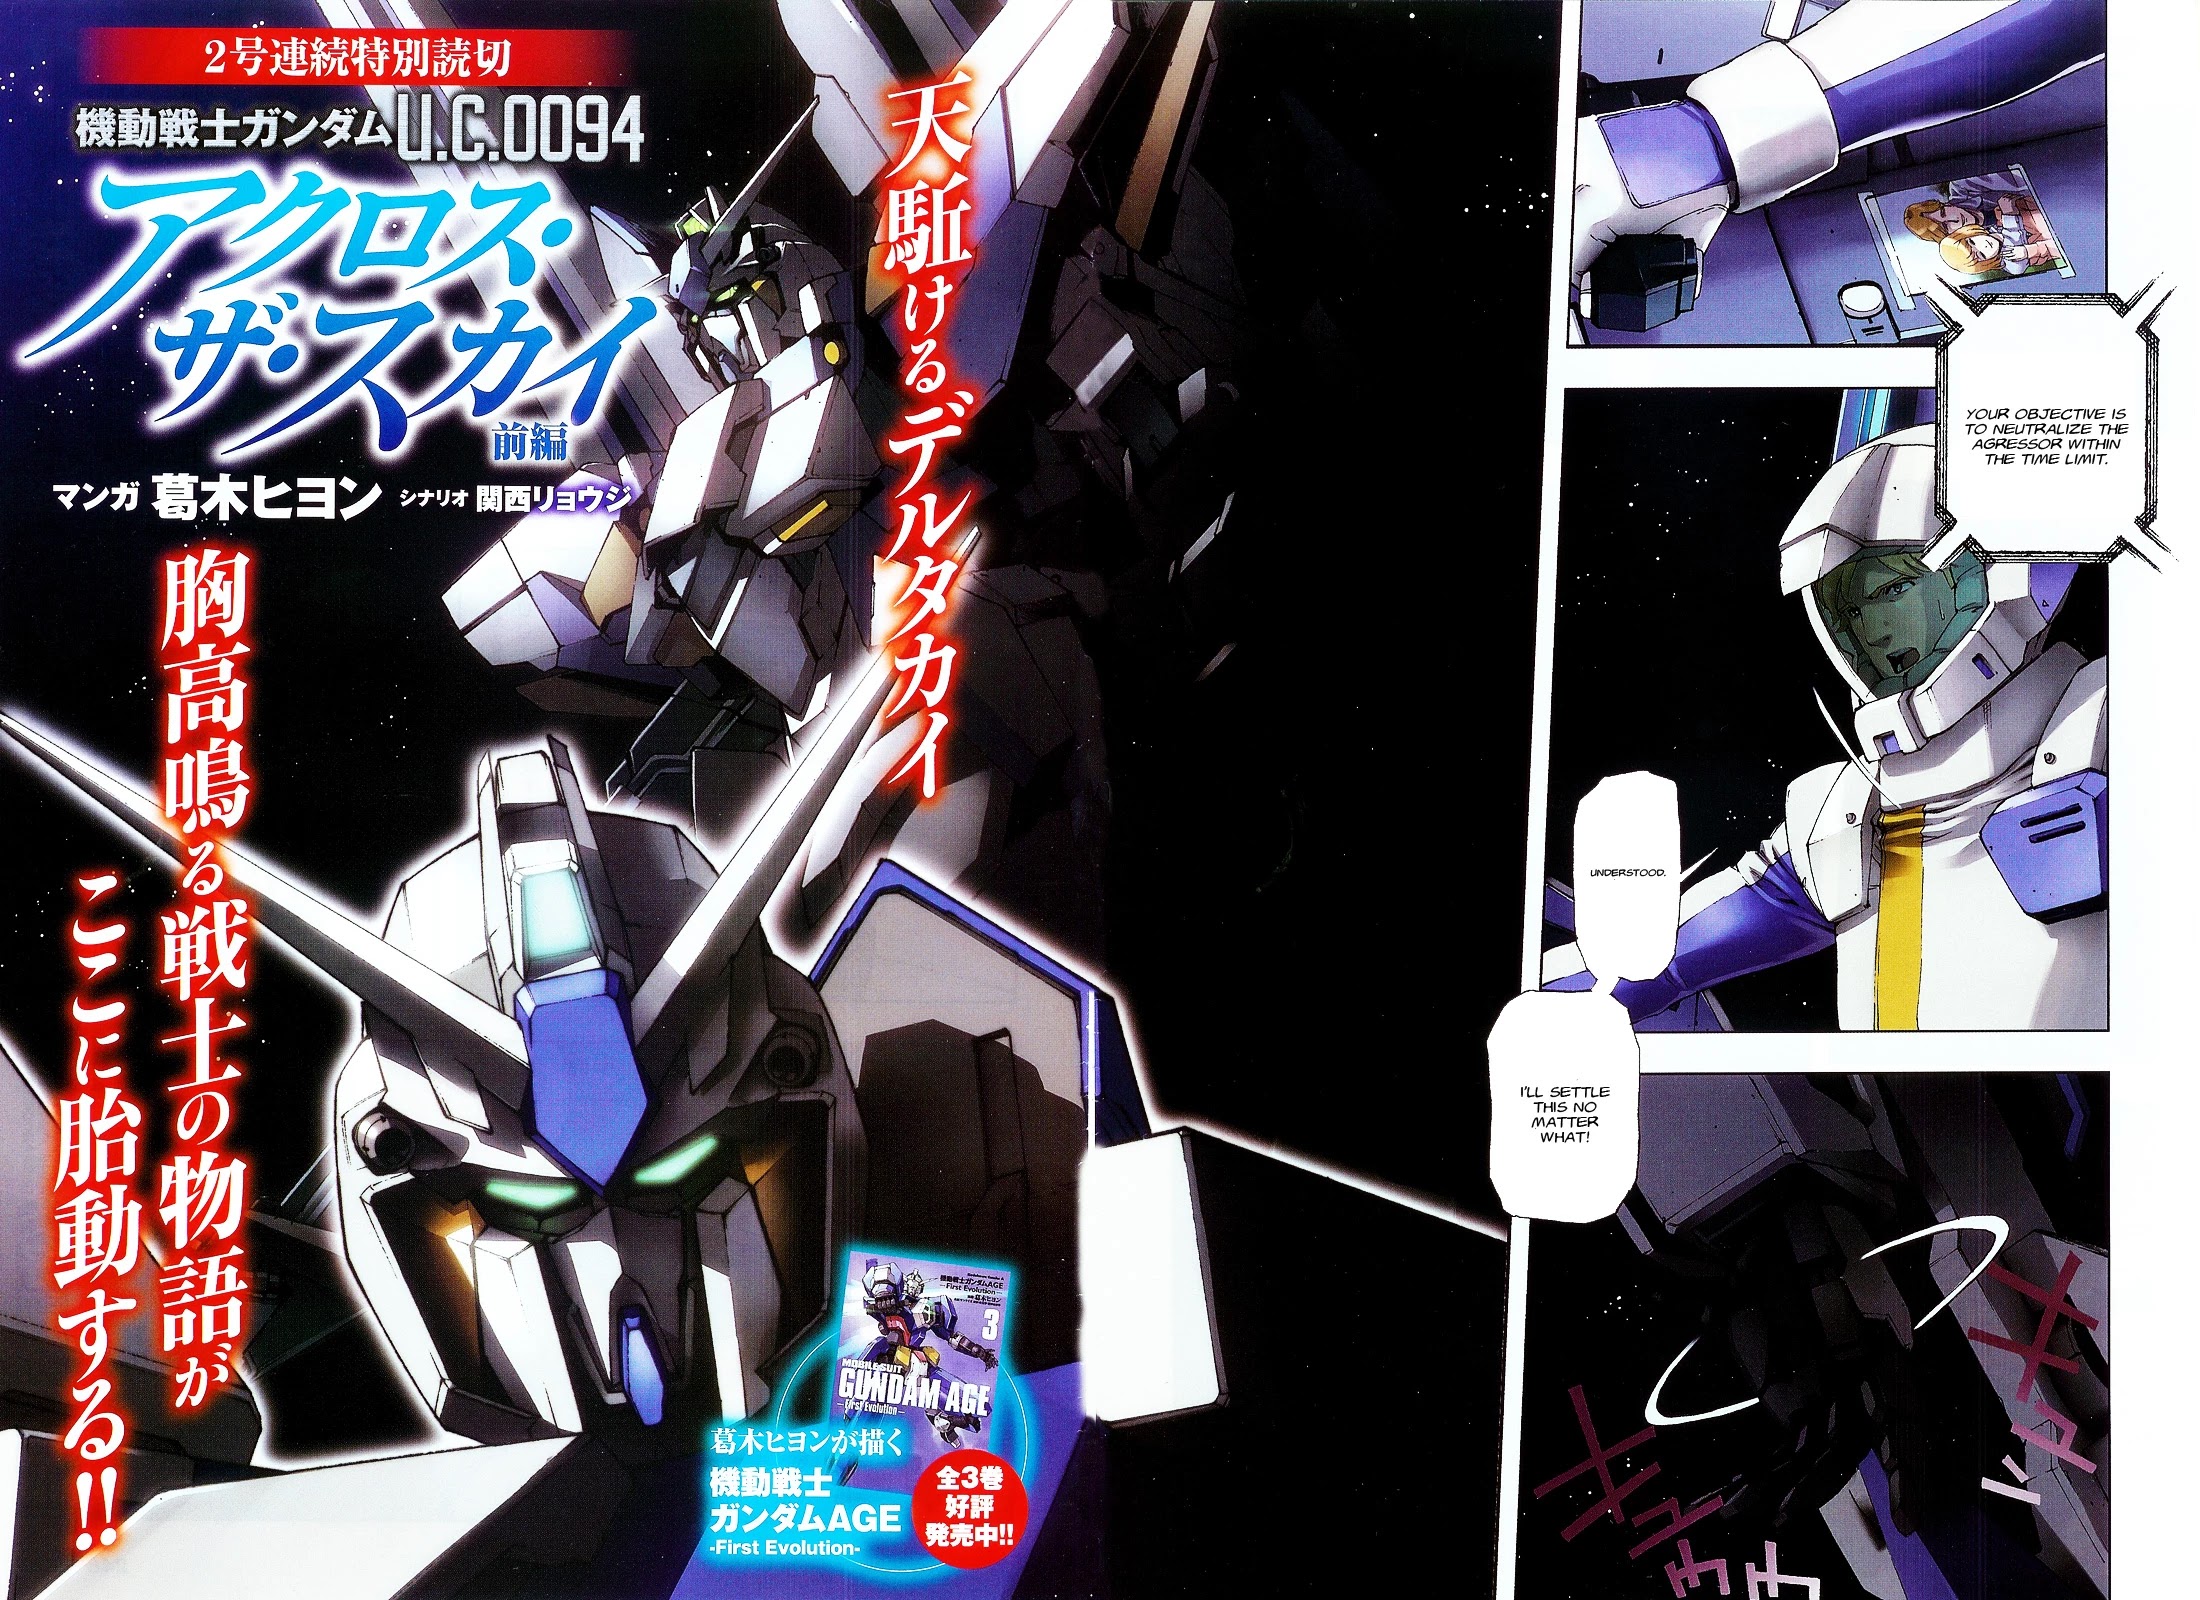 Kidou Senshi Gundam U.c. 0094 - Across The Sky - Page 2